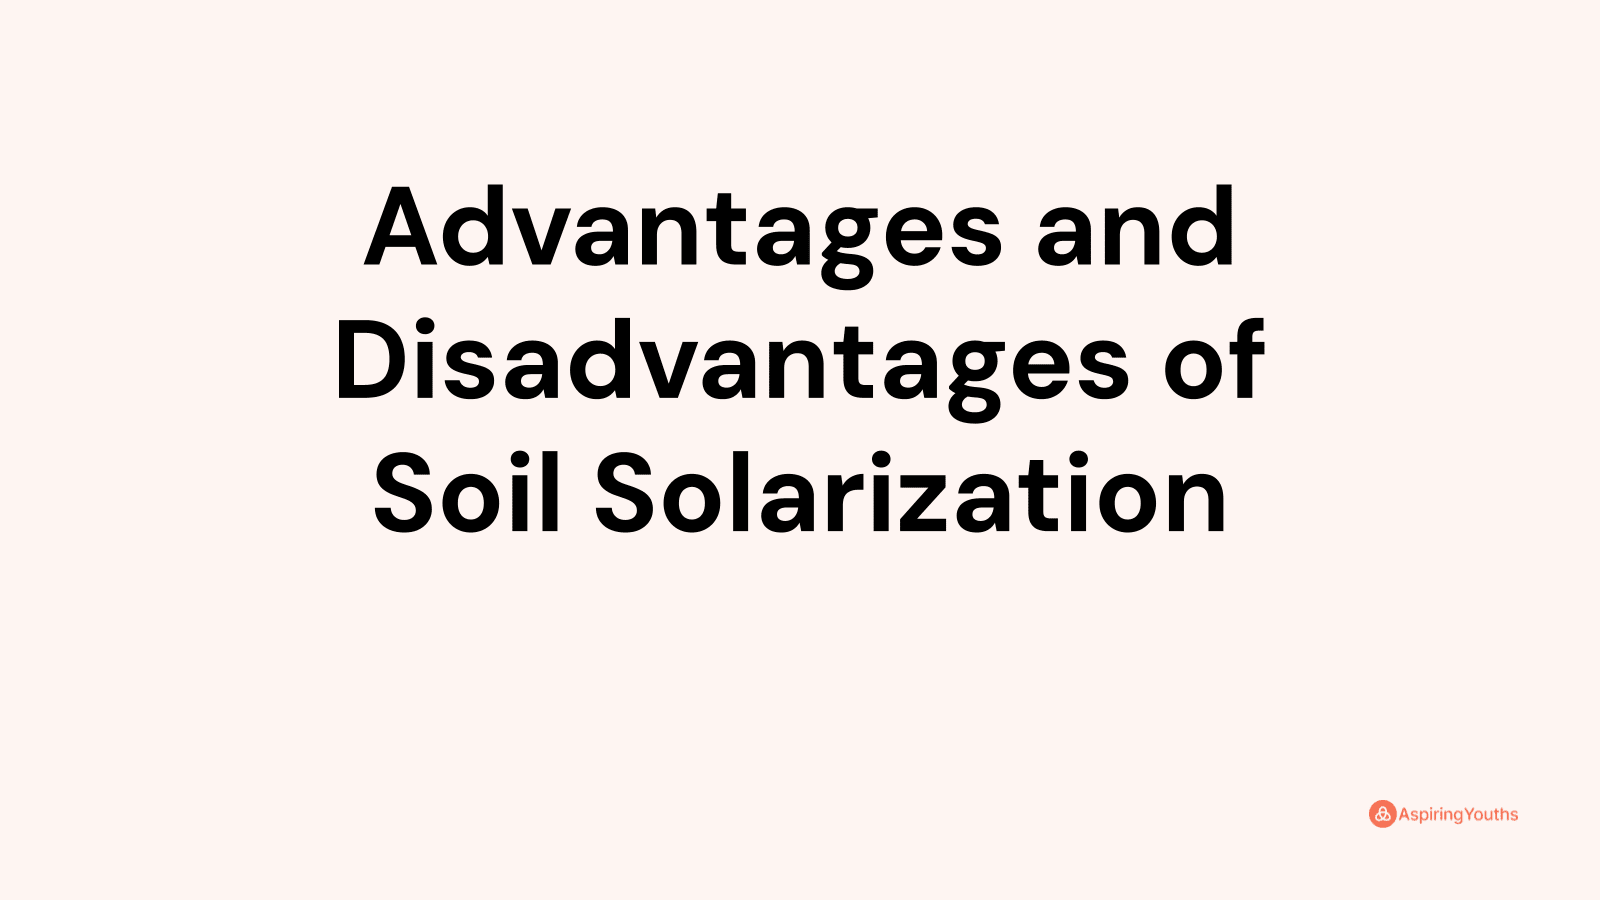 Advantages and disadvantages of Soil Solarization